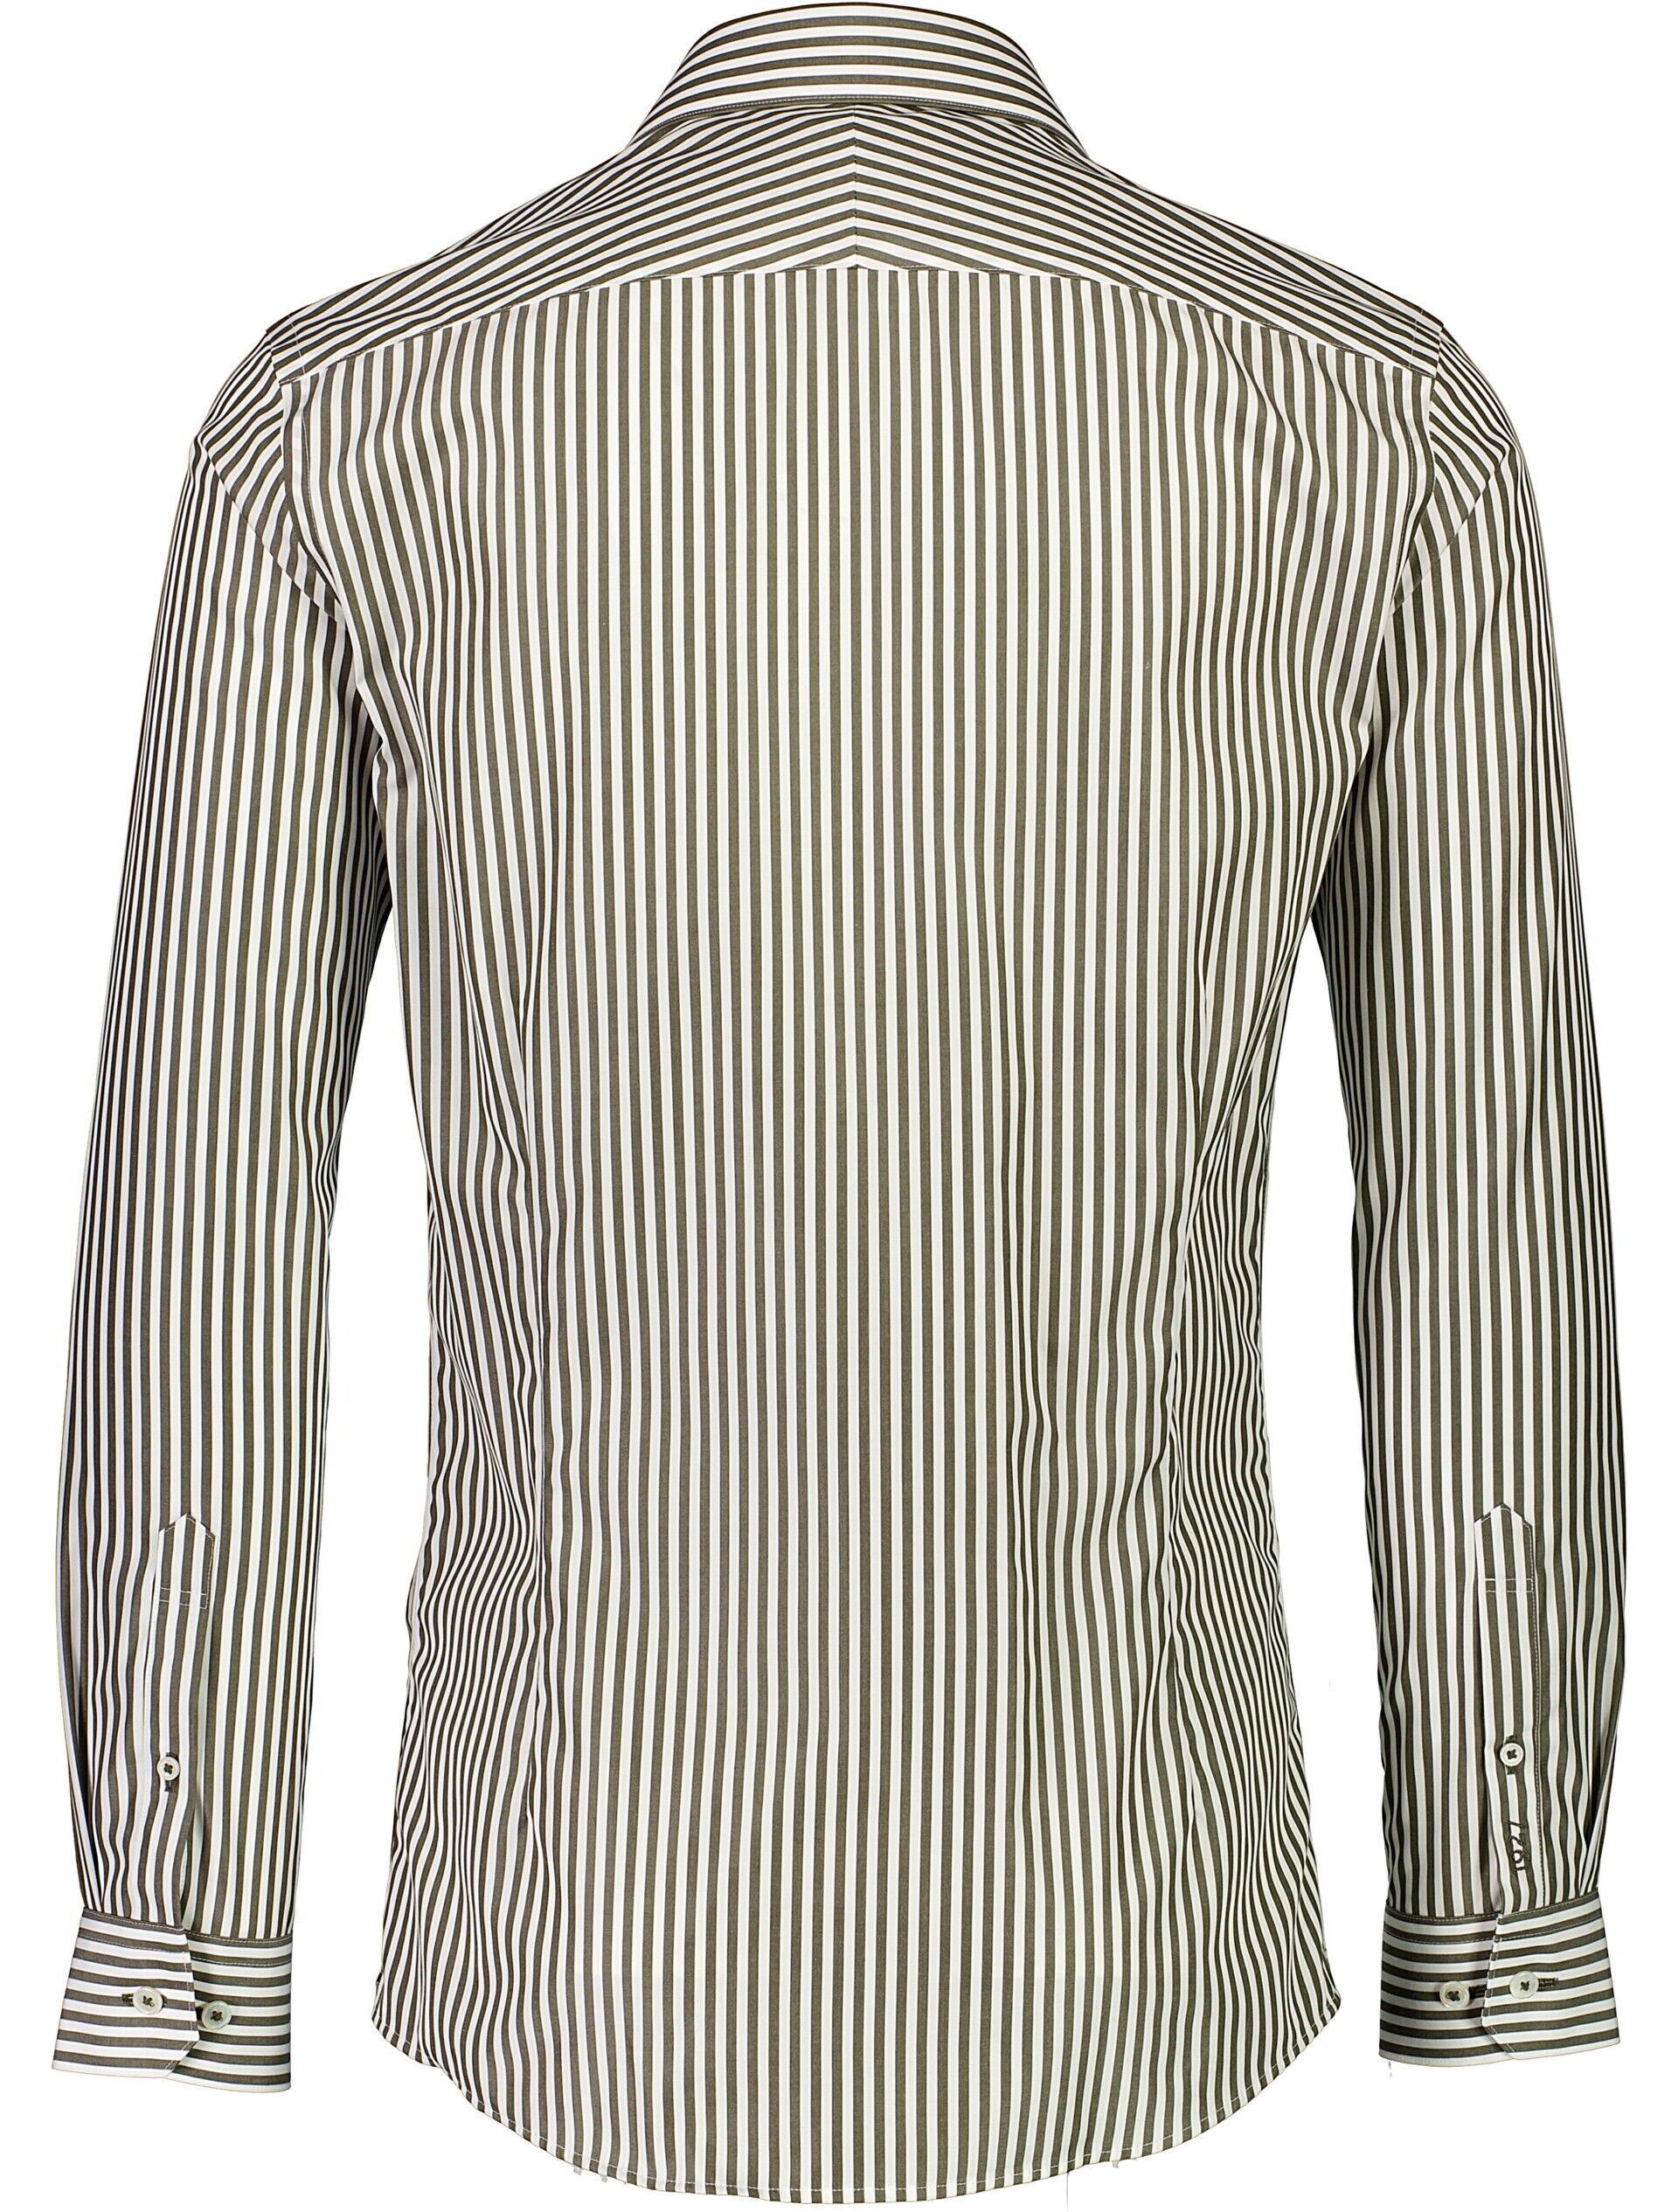 1927 Business casual shirt 30-247142